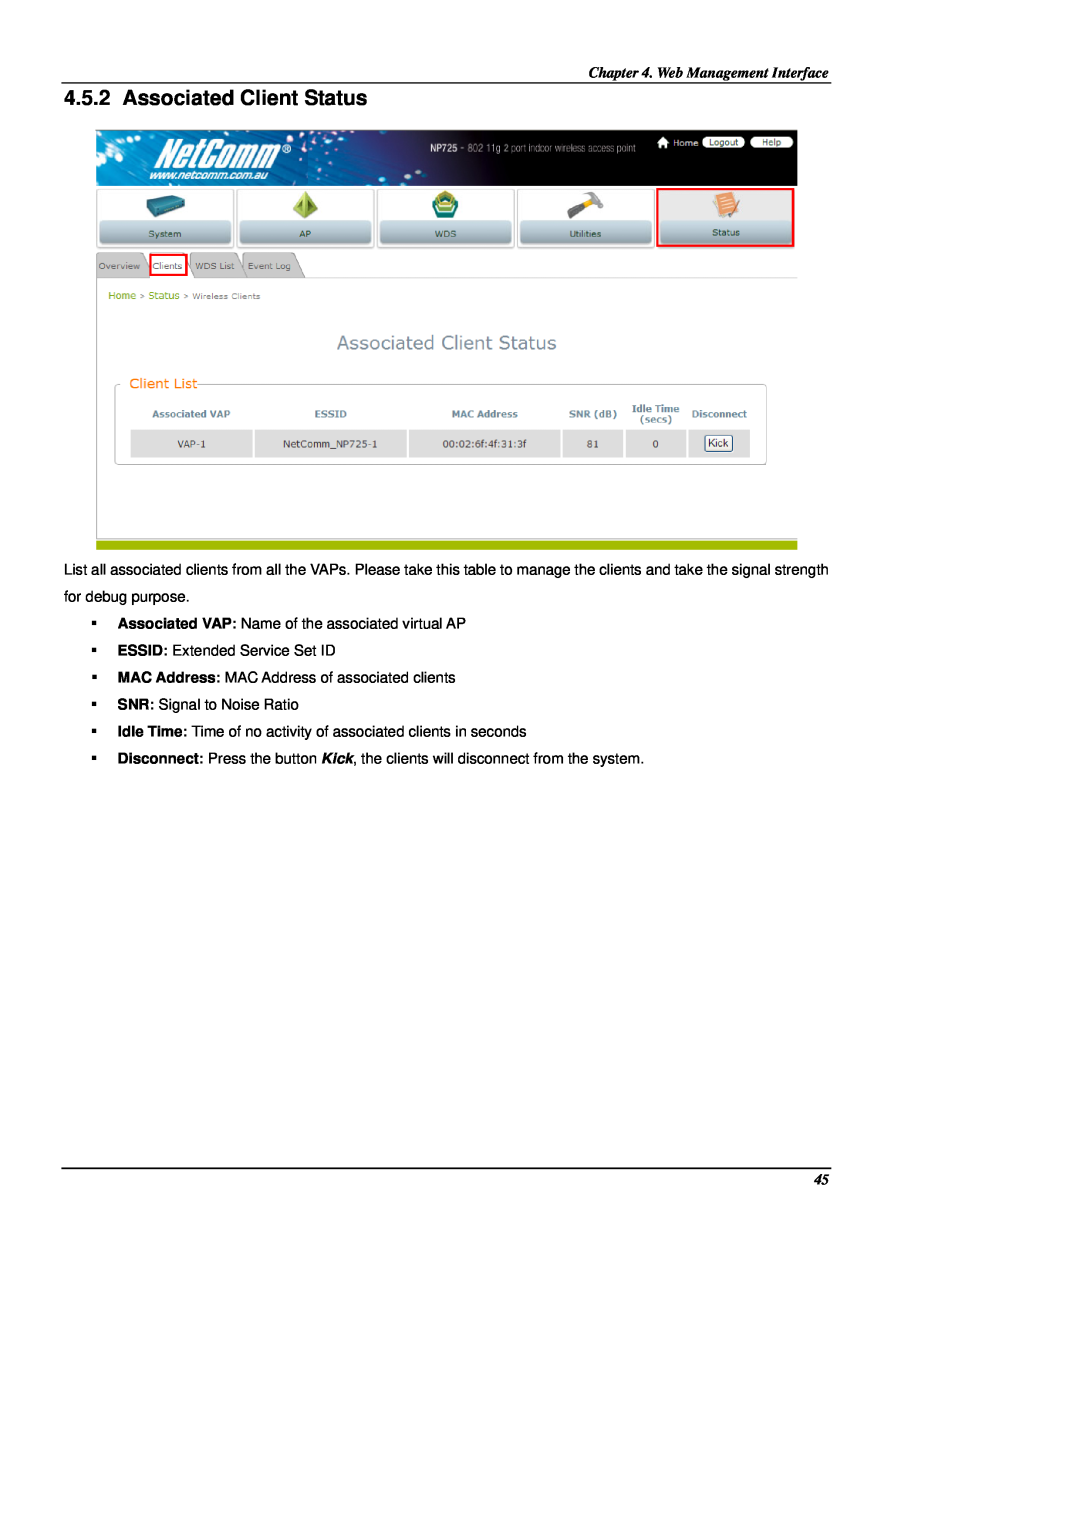 NetComm NP725 manual Associated Client Status, Web Management Interface 